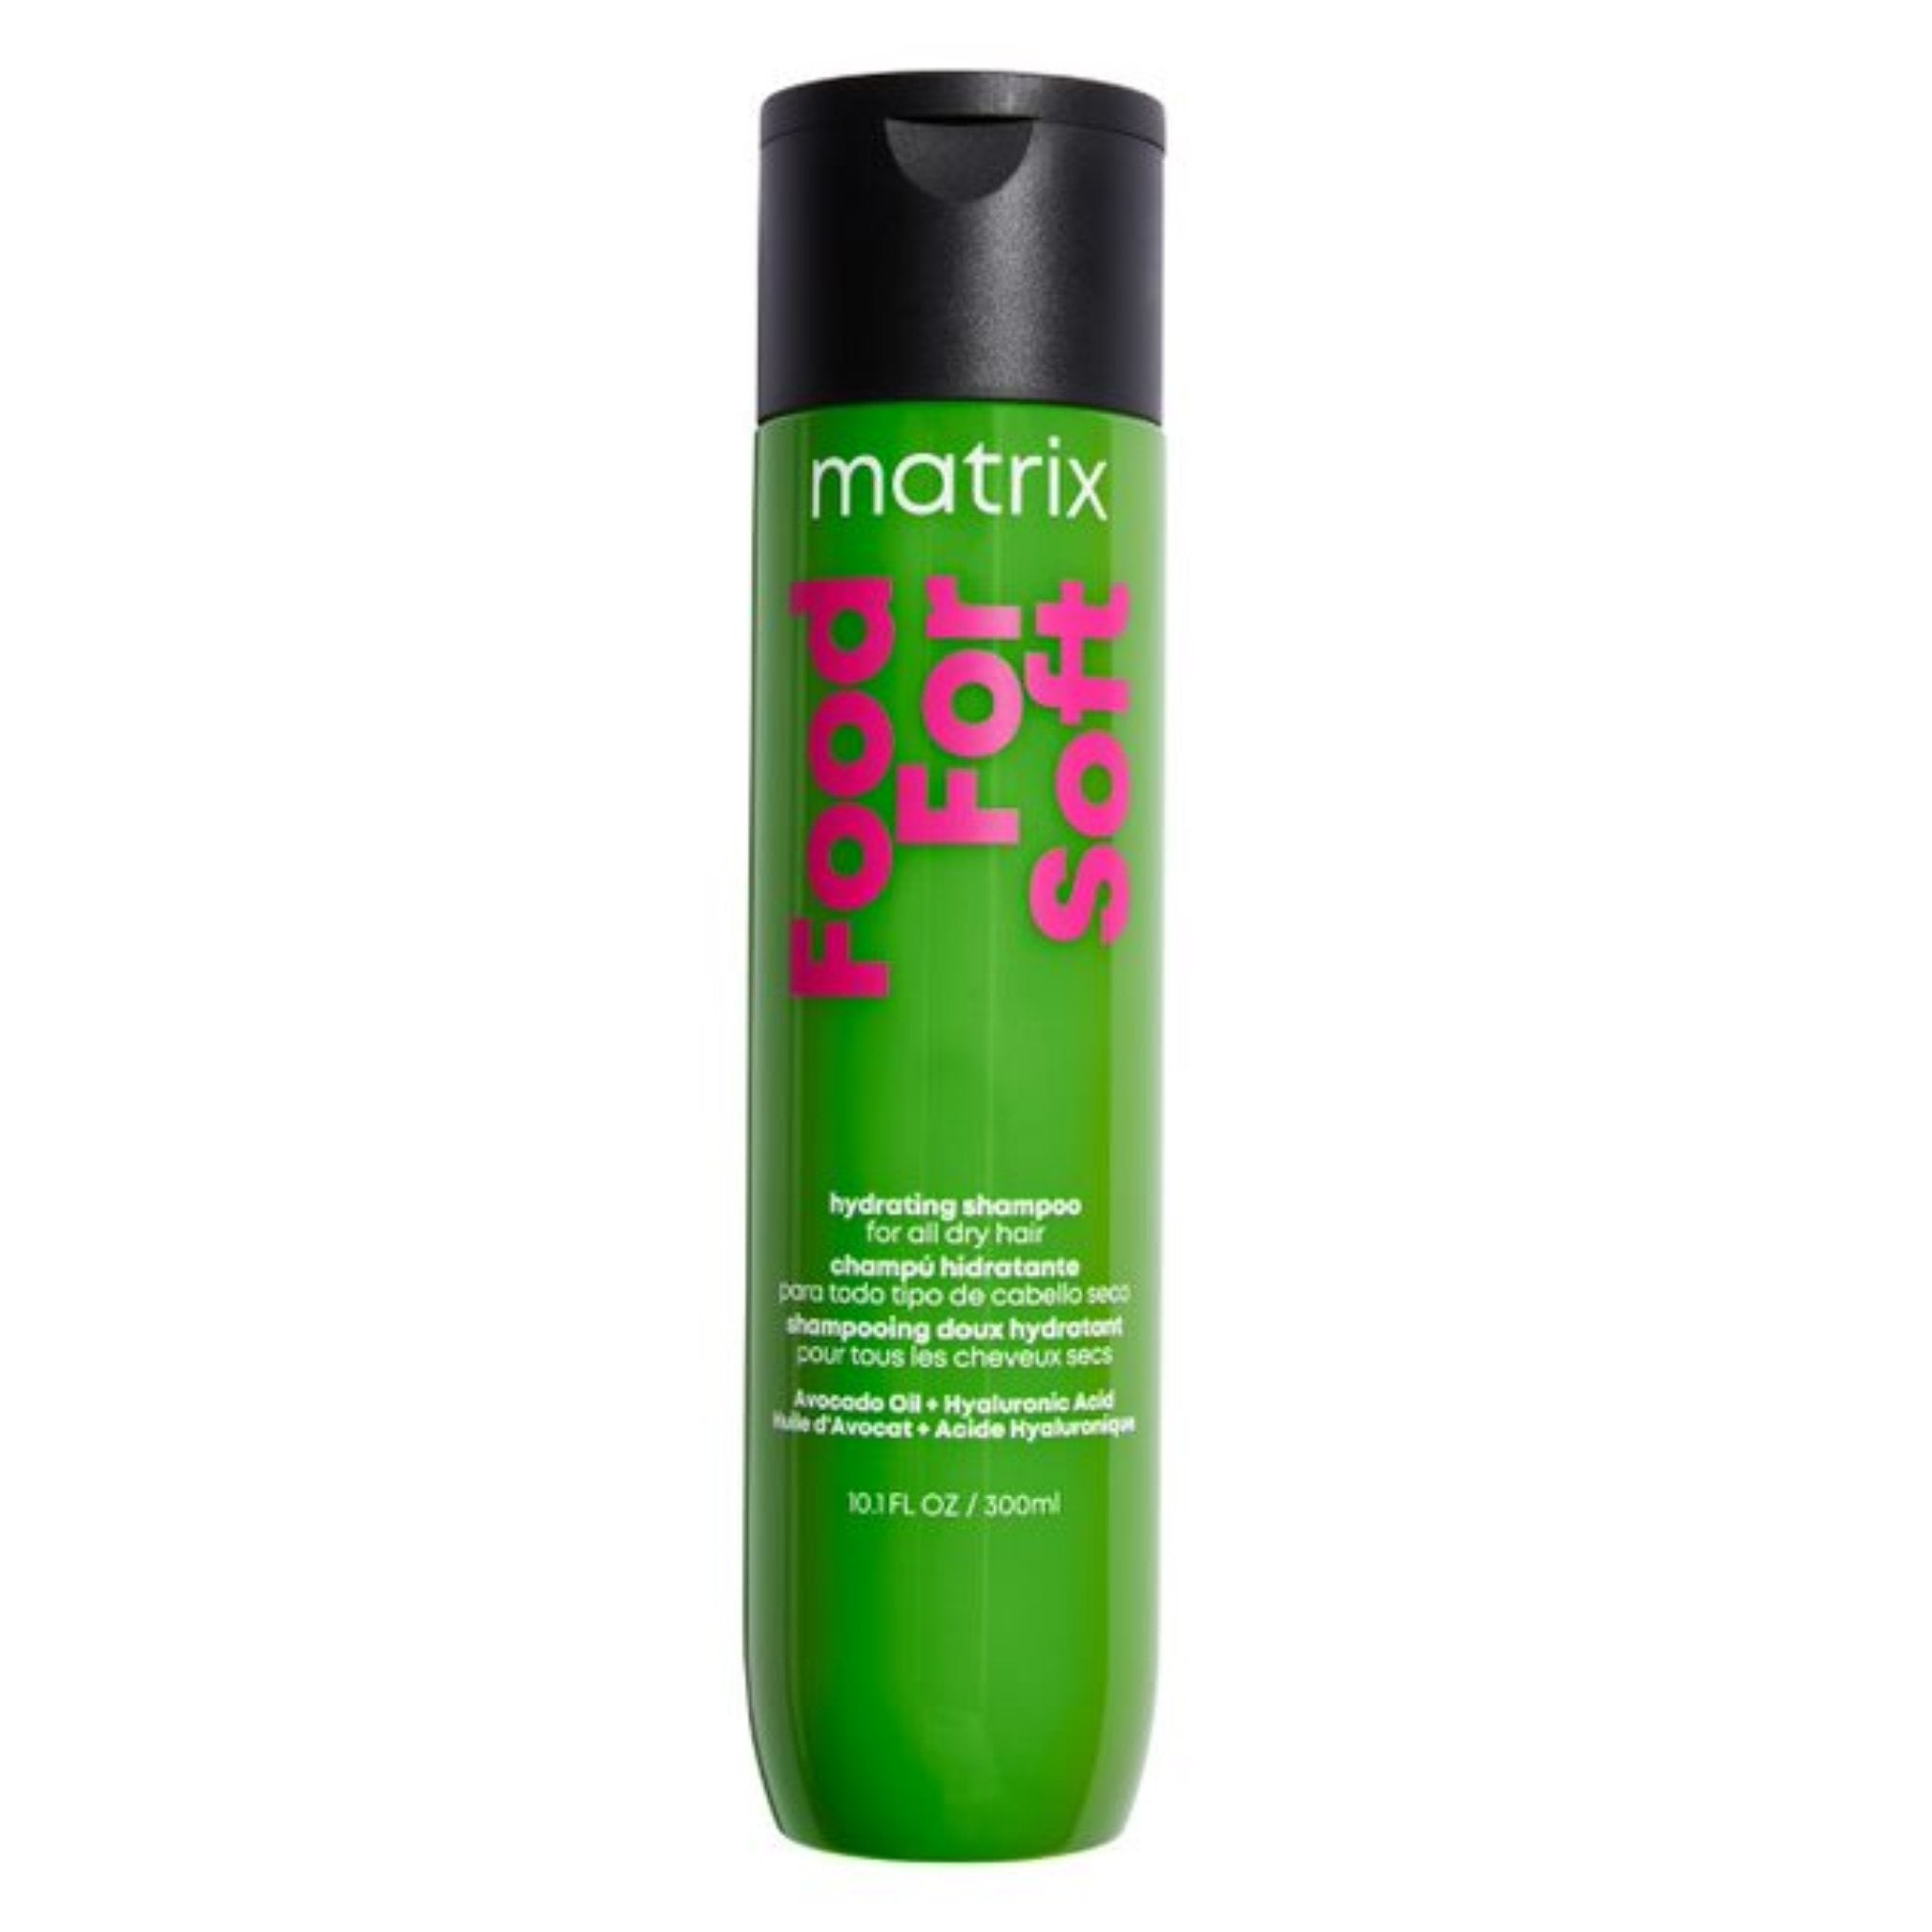 Matrix. Shampooing Hydratant Food for Soft - 300 ml - Concept C. Shop